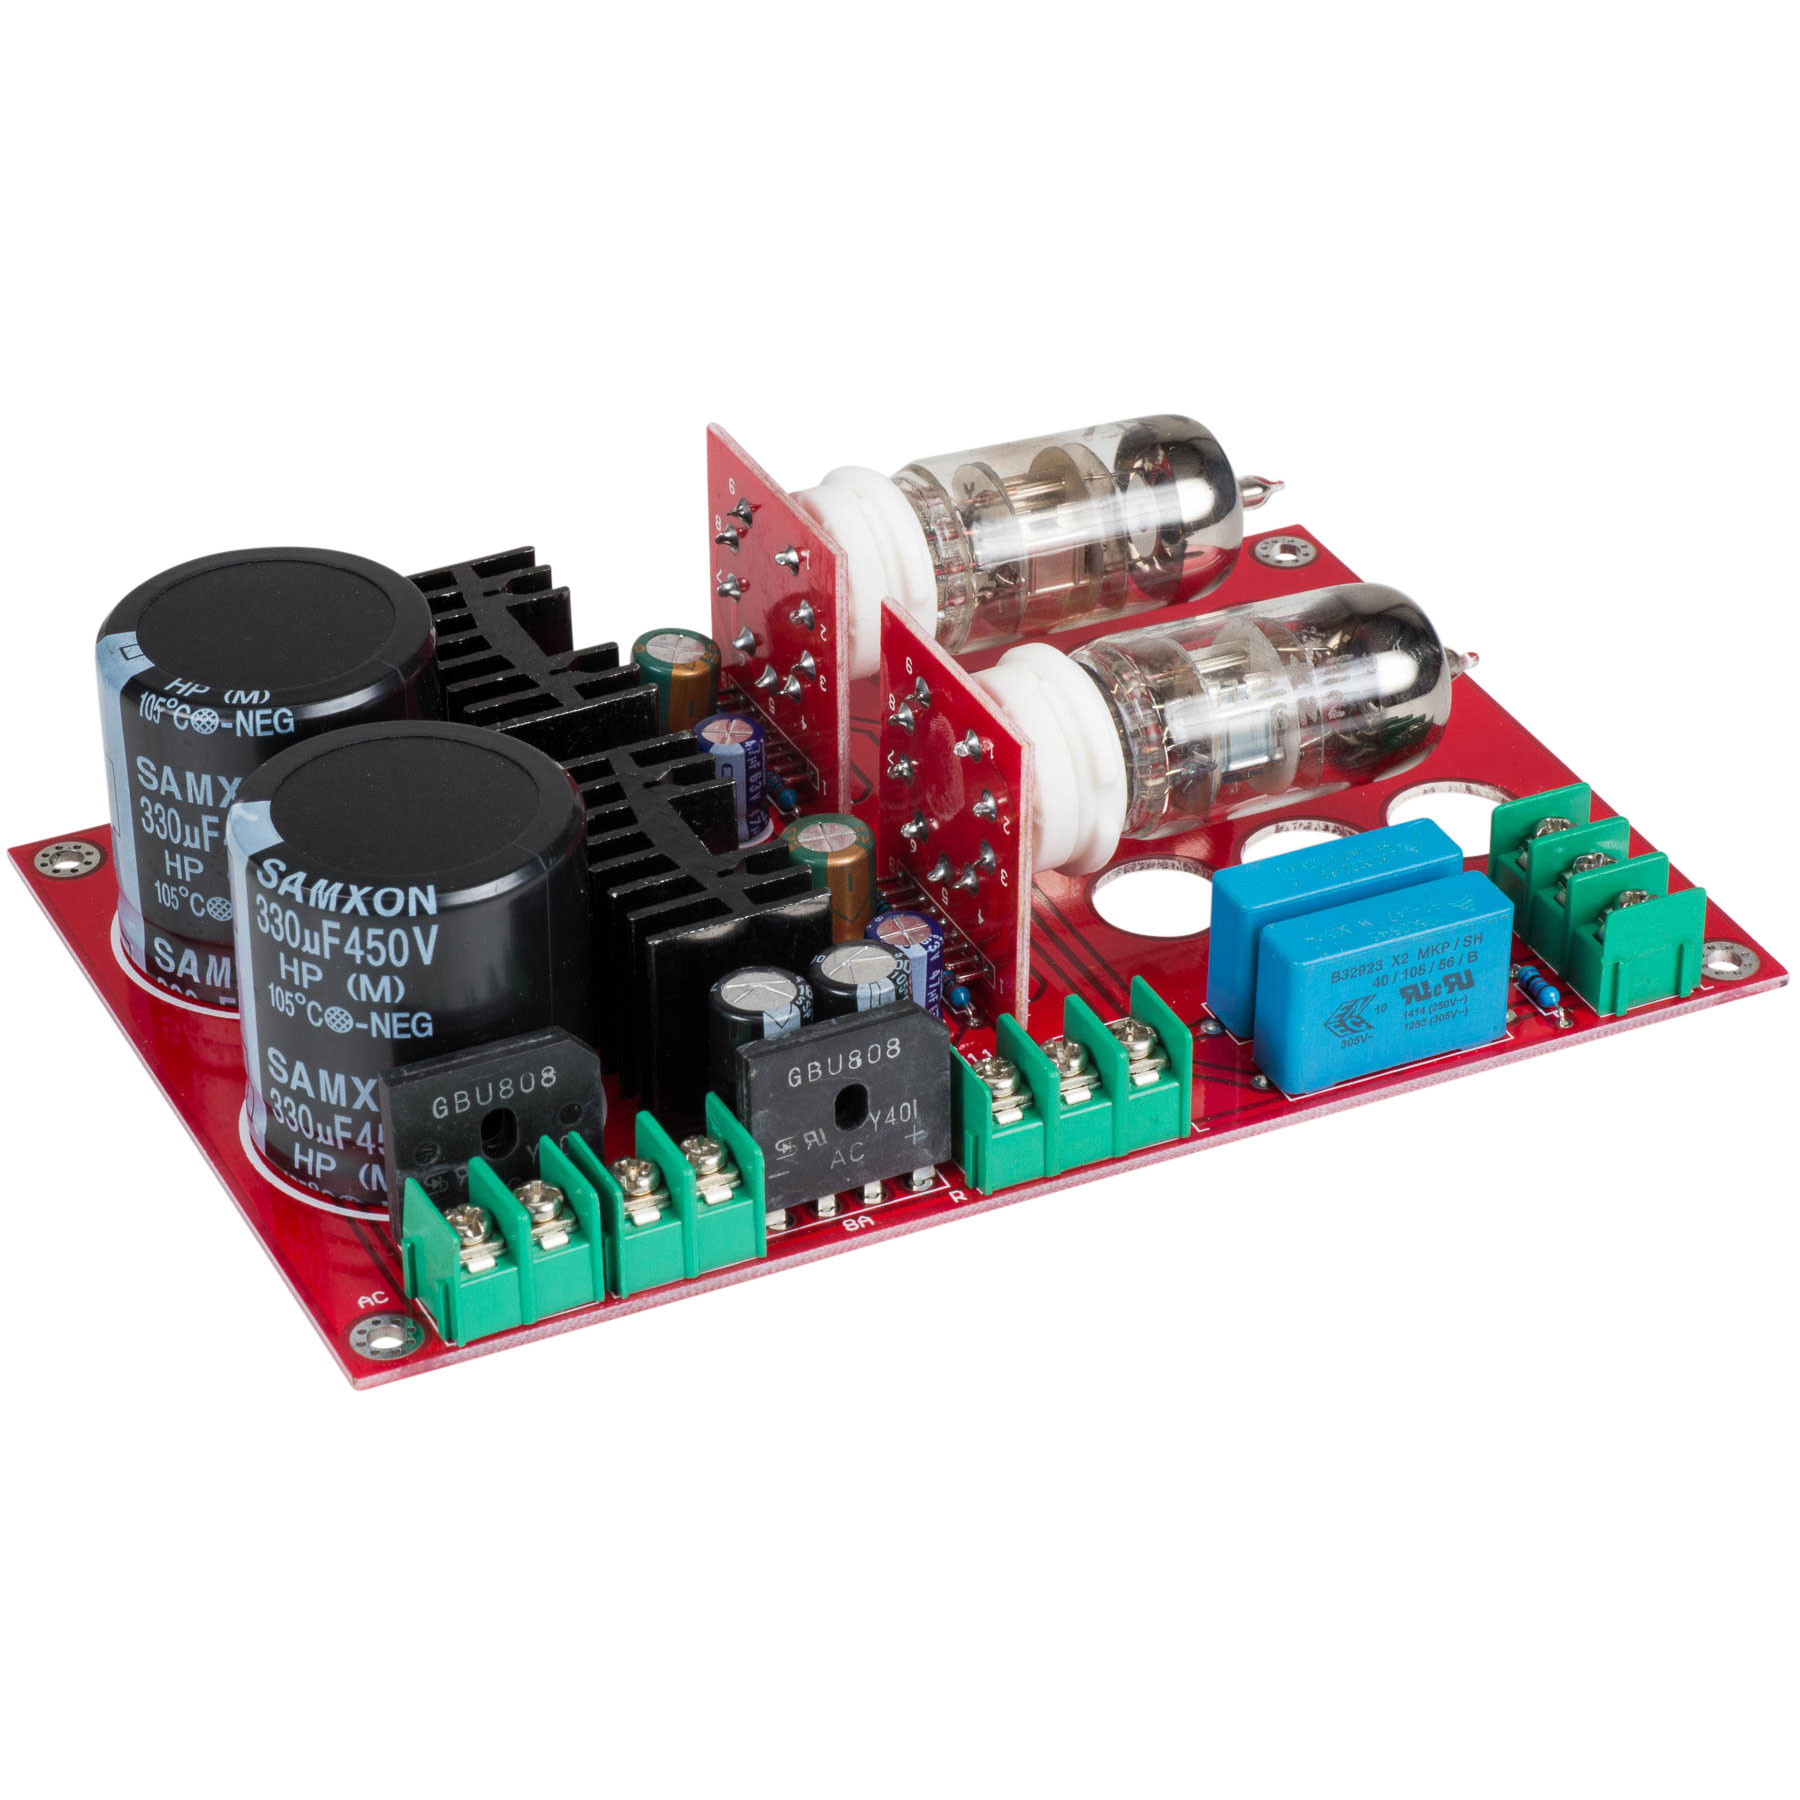 DIY Pro Audio Kits
 Yuan Jing Pre and Tube Amplifier Kit 6N2 SRPP for DIY